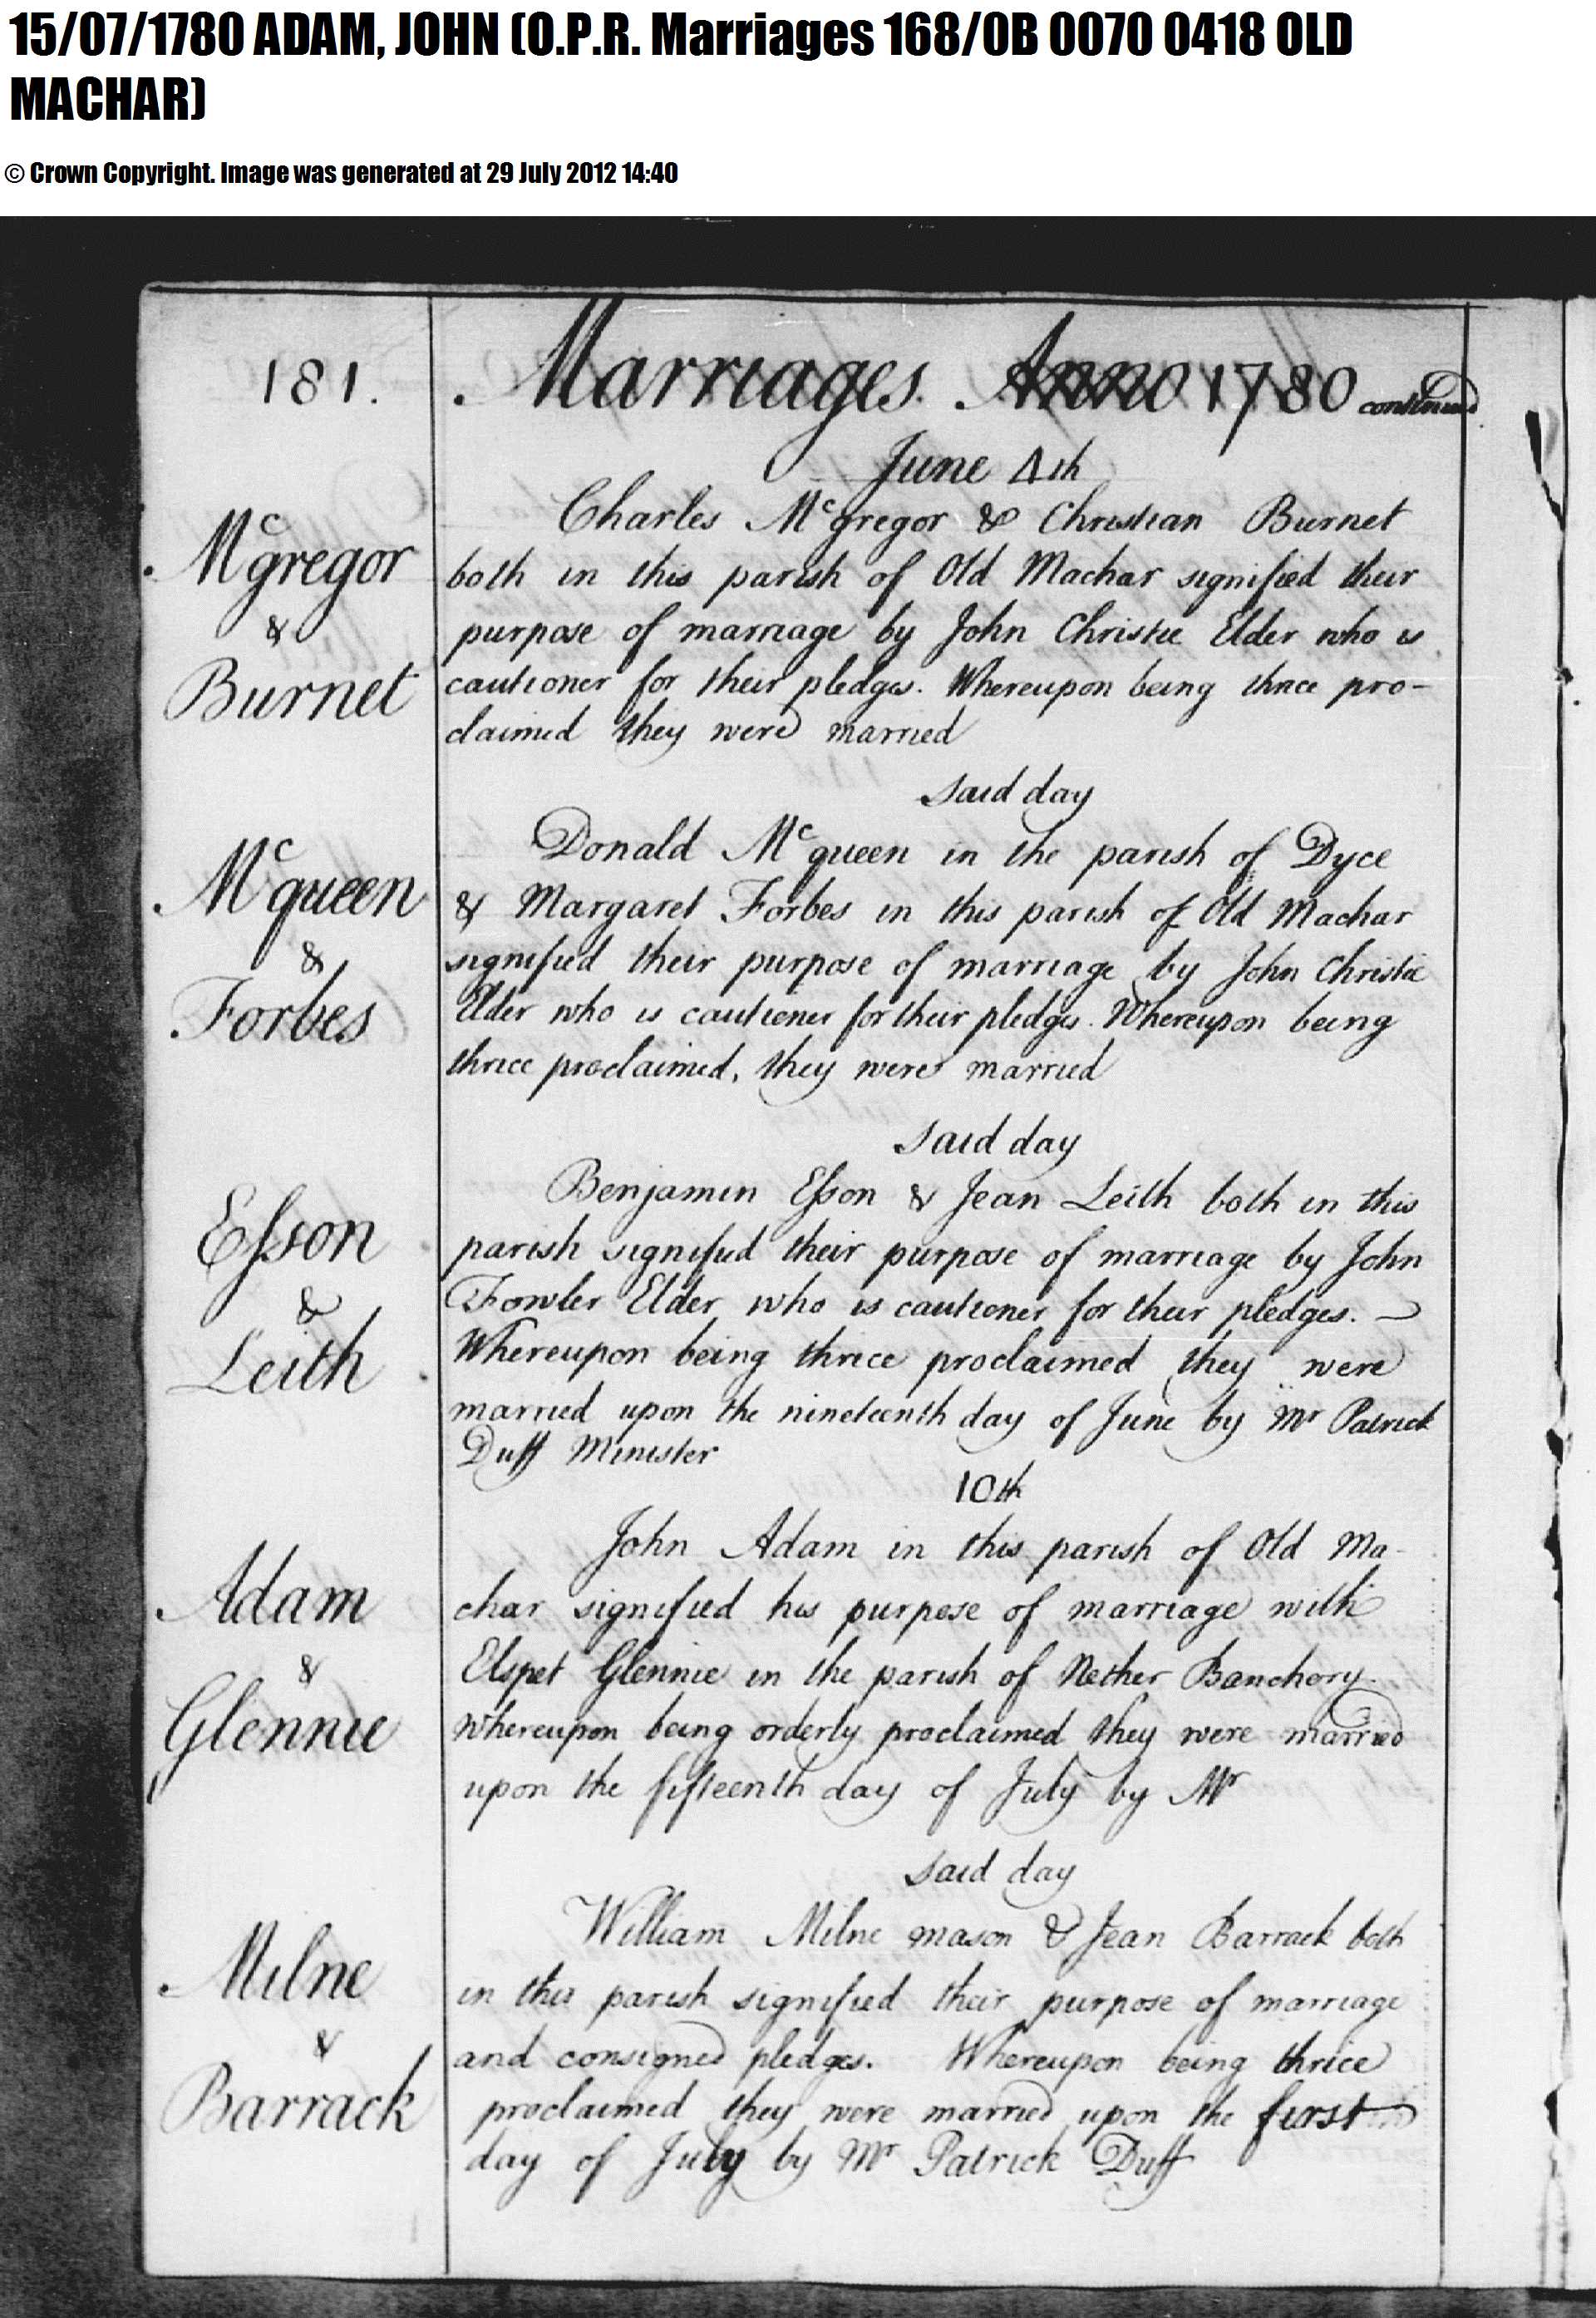 John Adam and Elspet Glennie - Marriage certificate, July 15, 1780